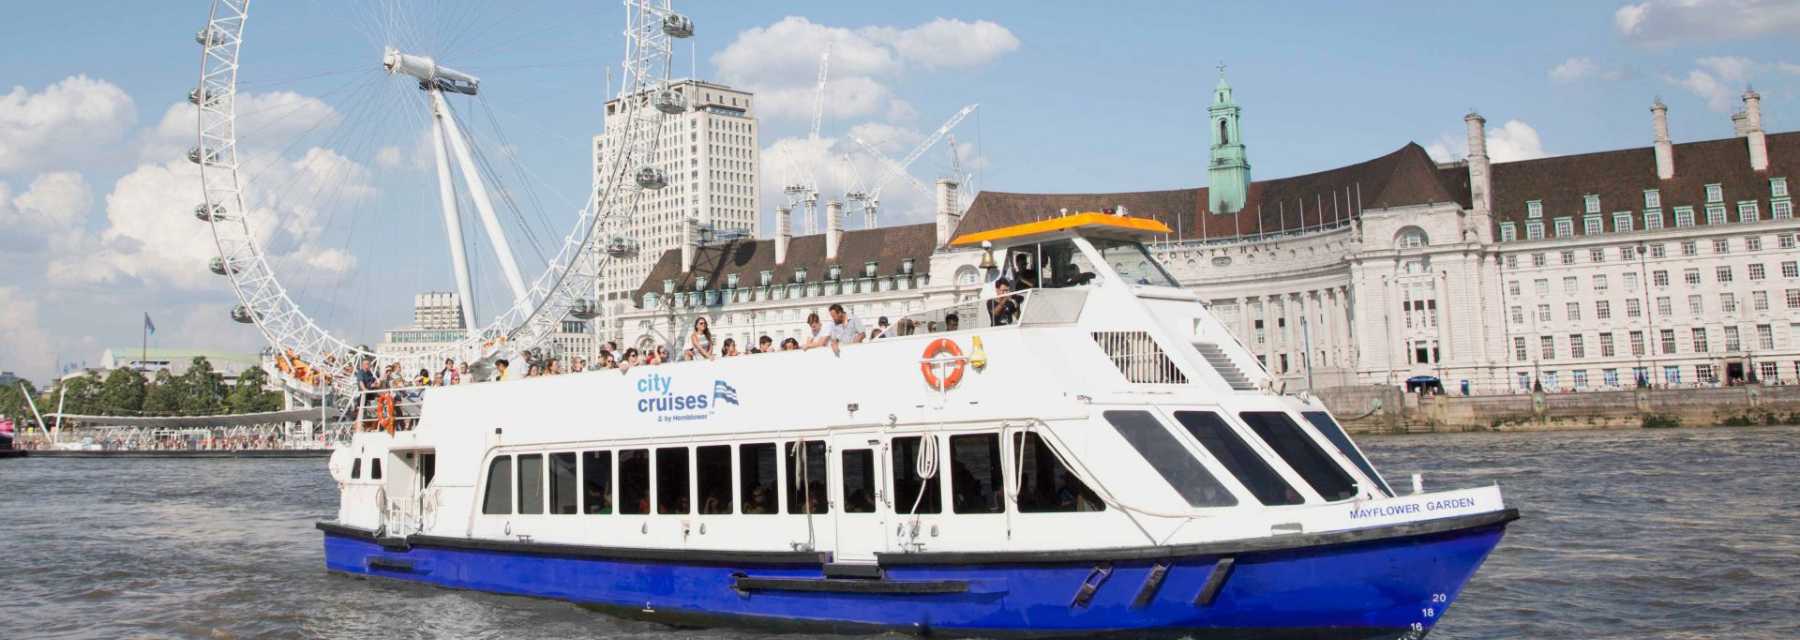 london river tours thames